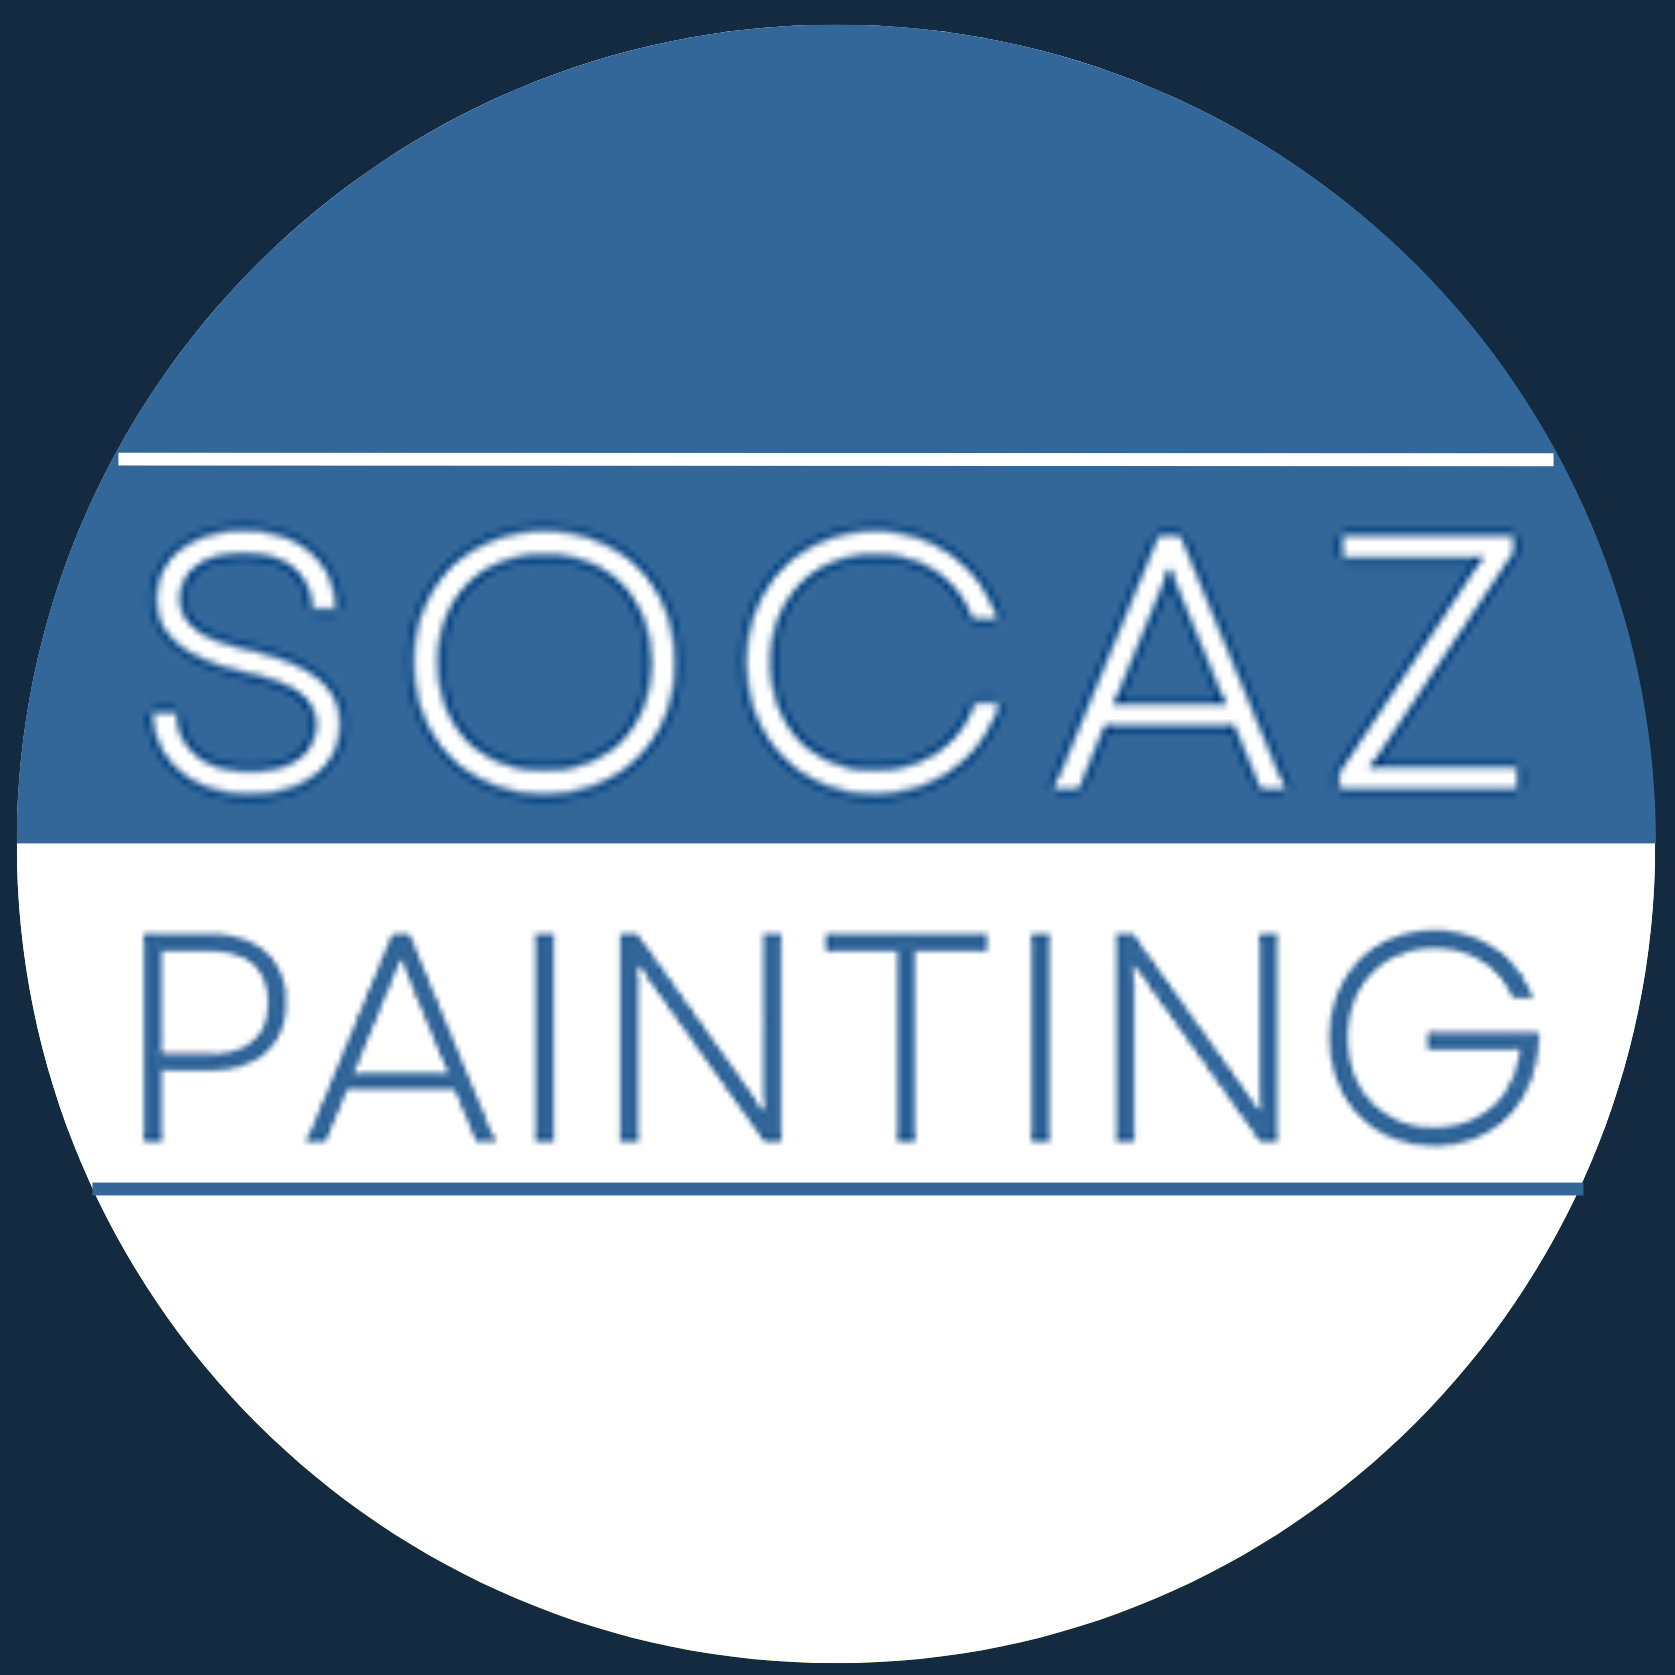 Socaz Painting logo